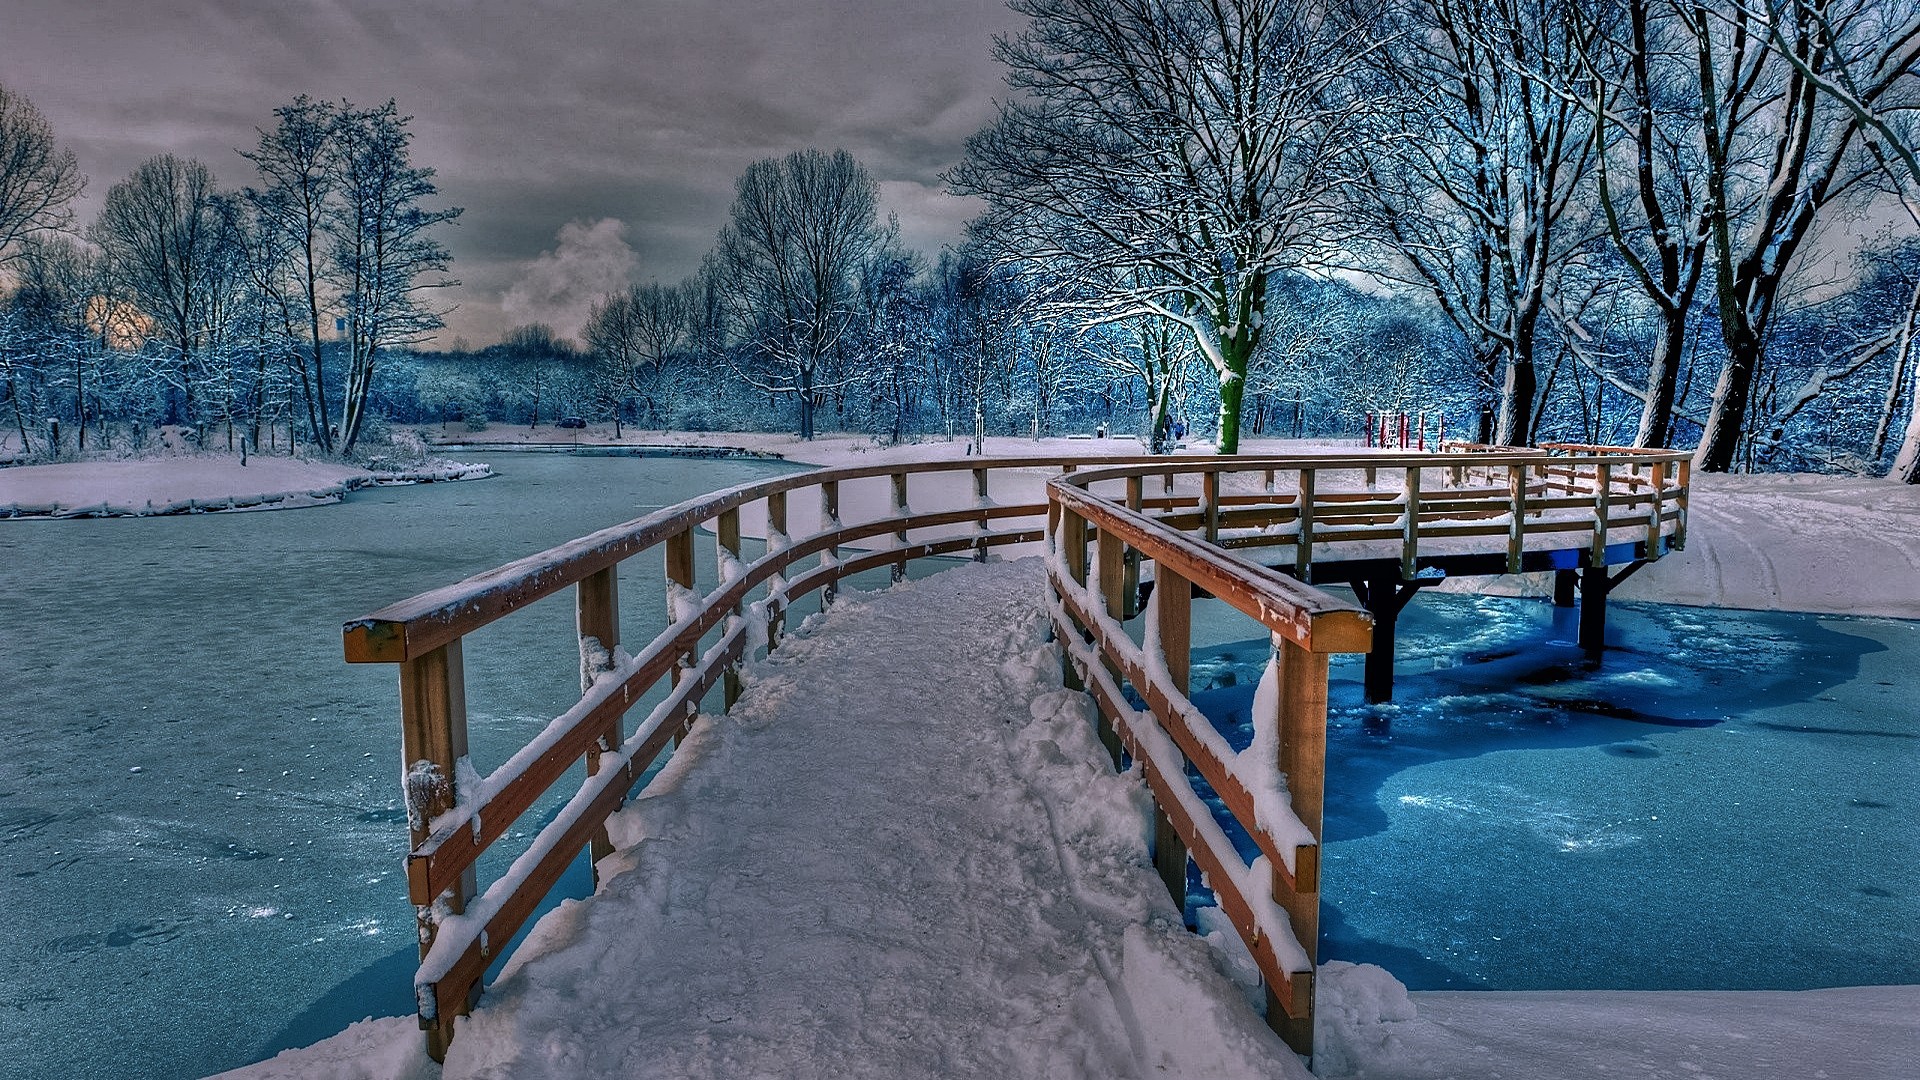 Wonderful frozen bridge over a frozen lake with blue water